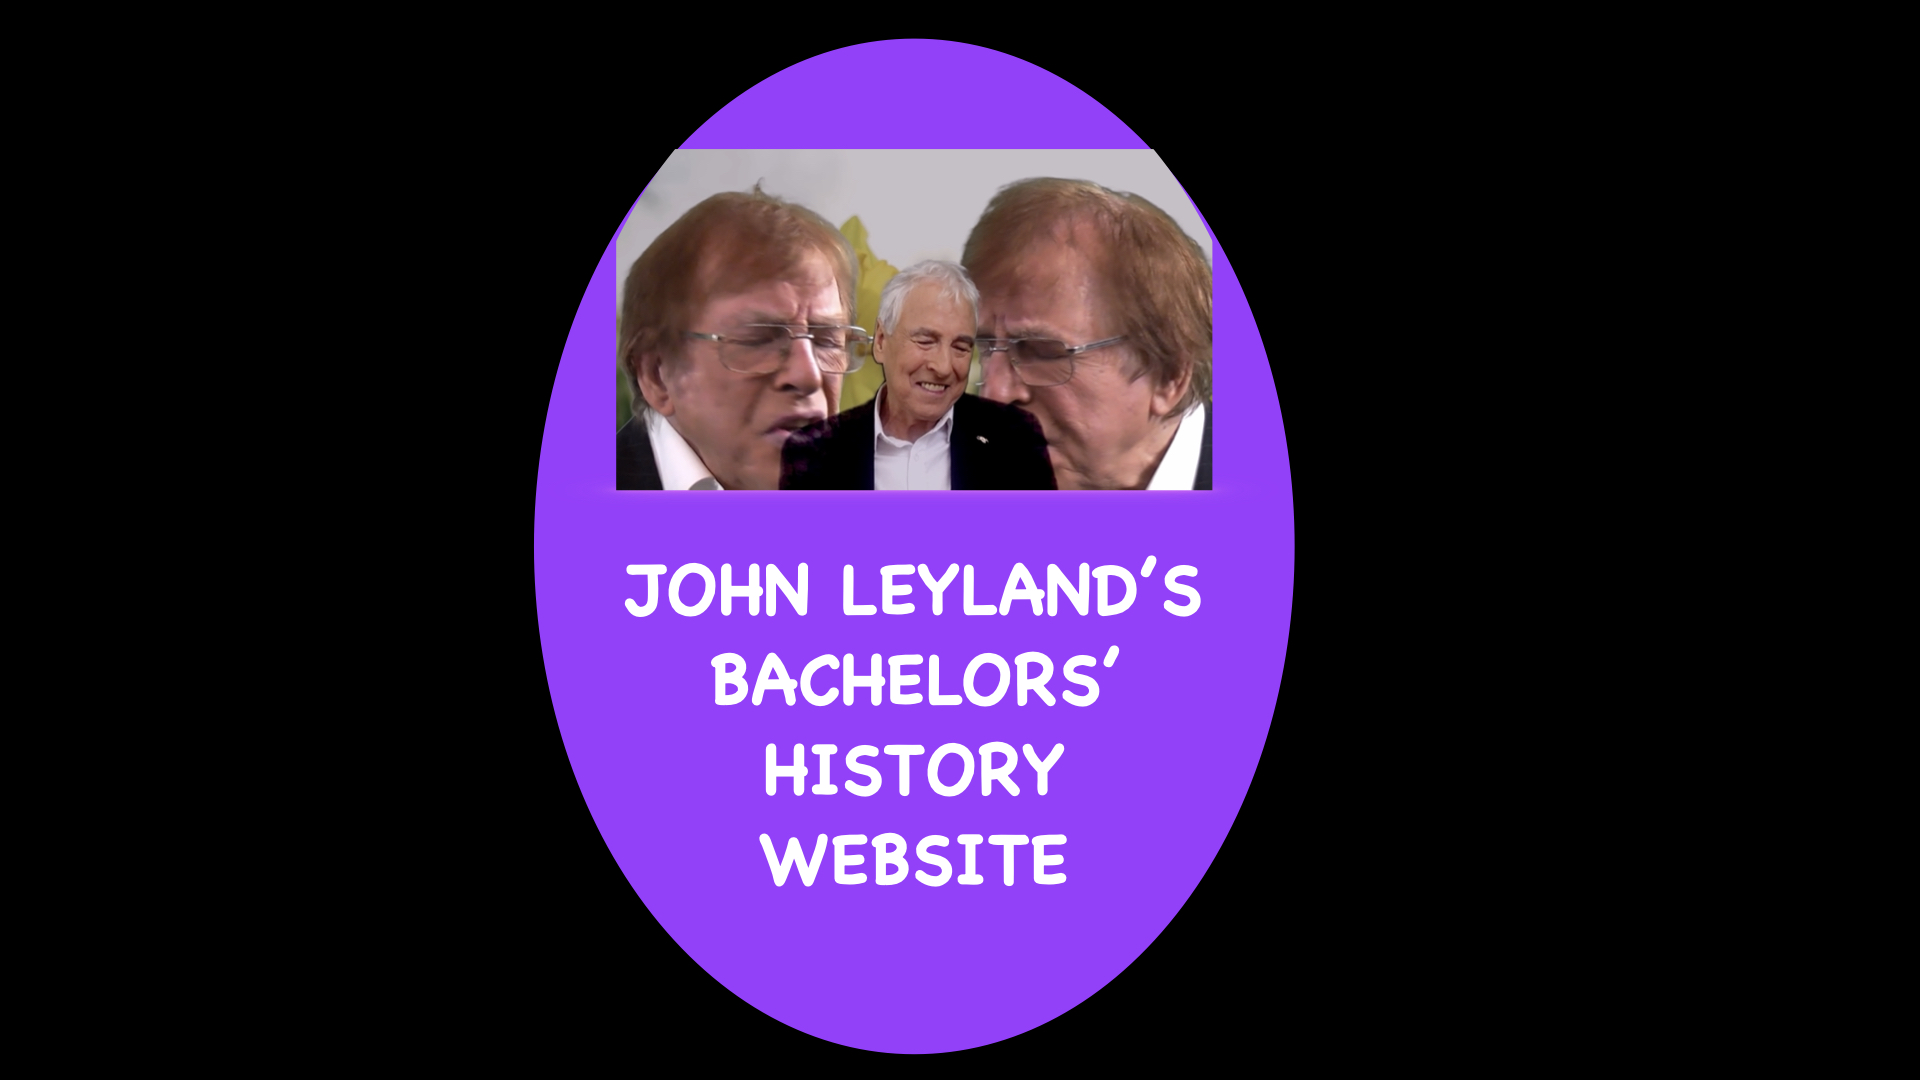 THE JOHN LEYLAND BACHELORS' SITE